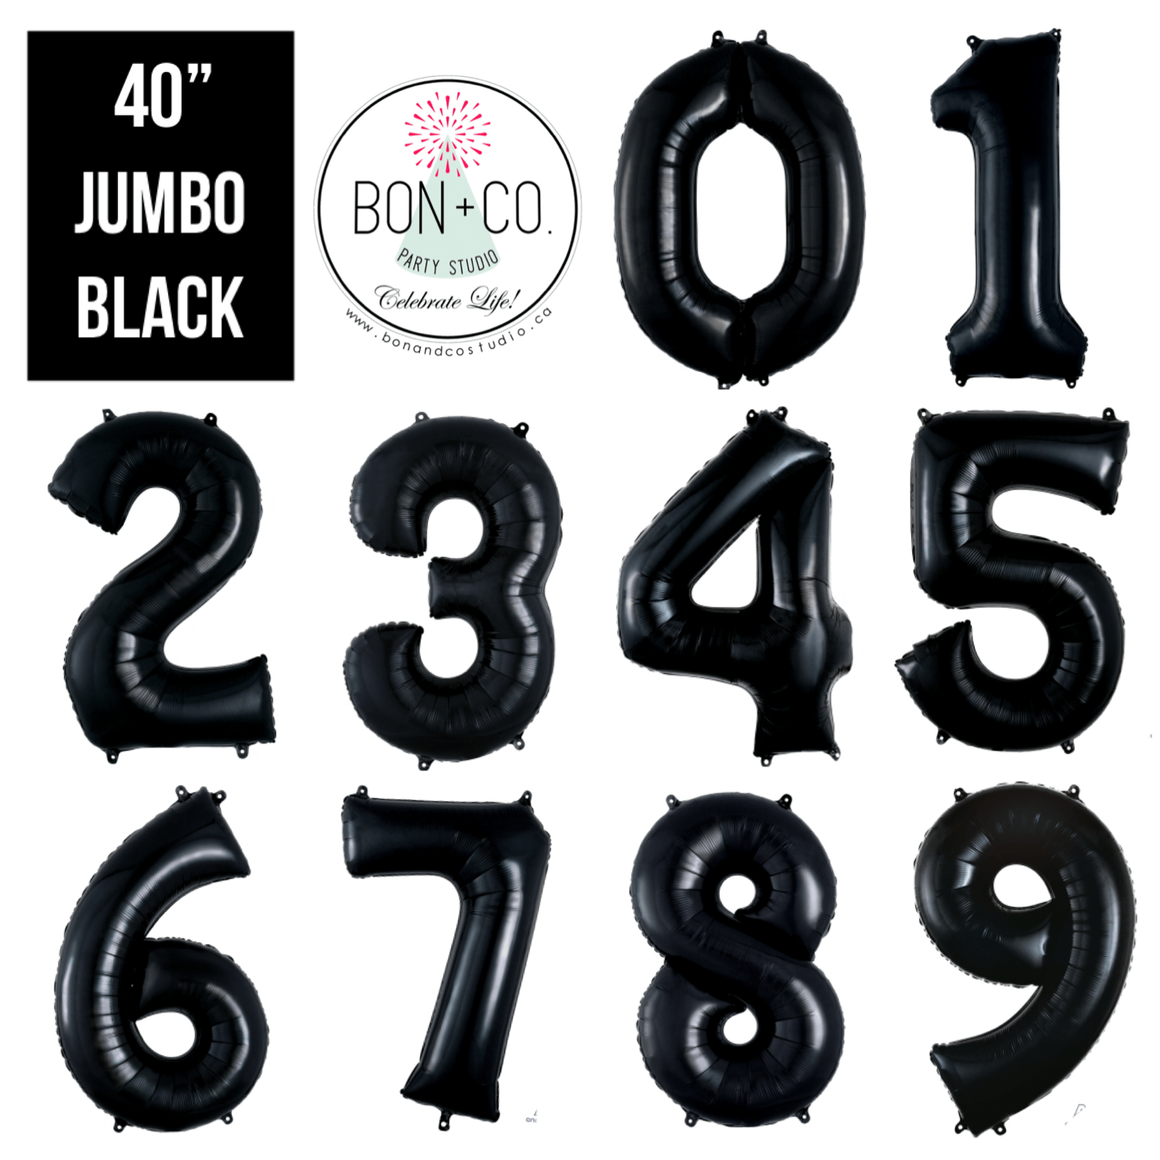 BALLOON BAR - 40" JUMBO NUMBER BLACK